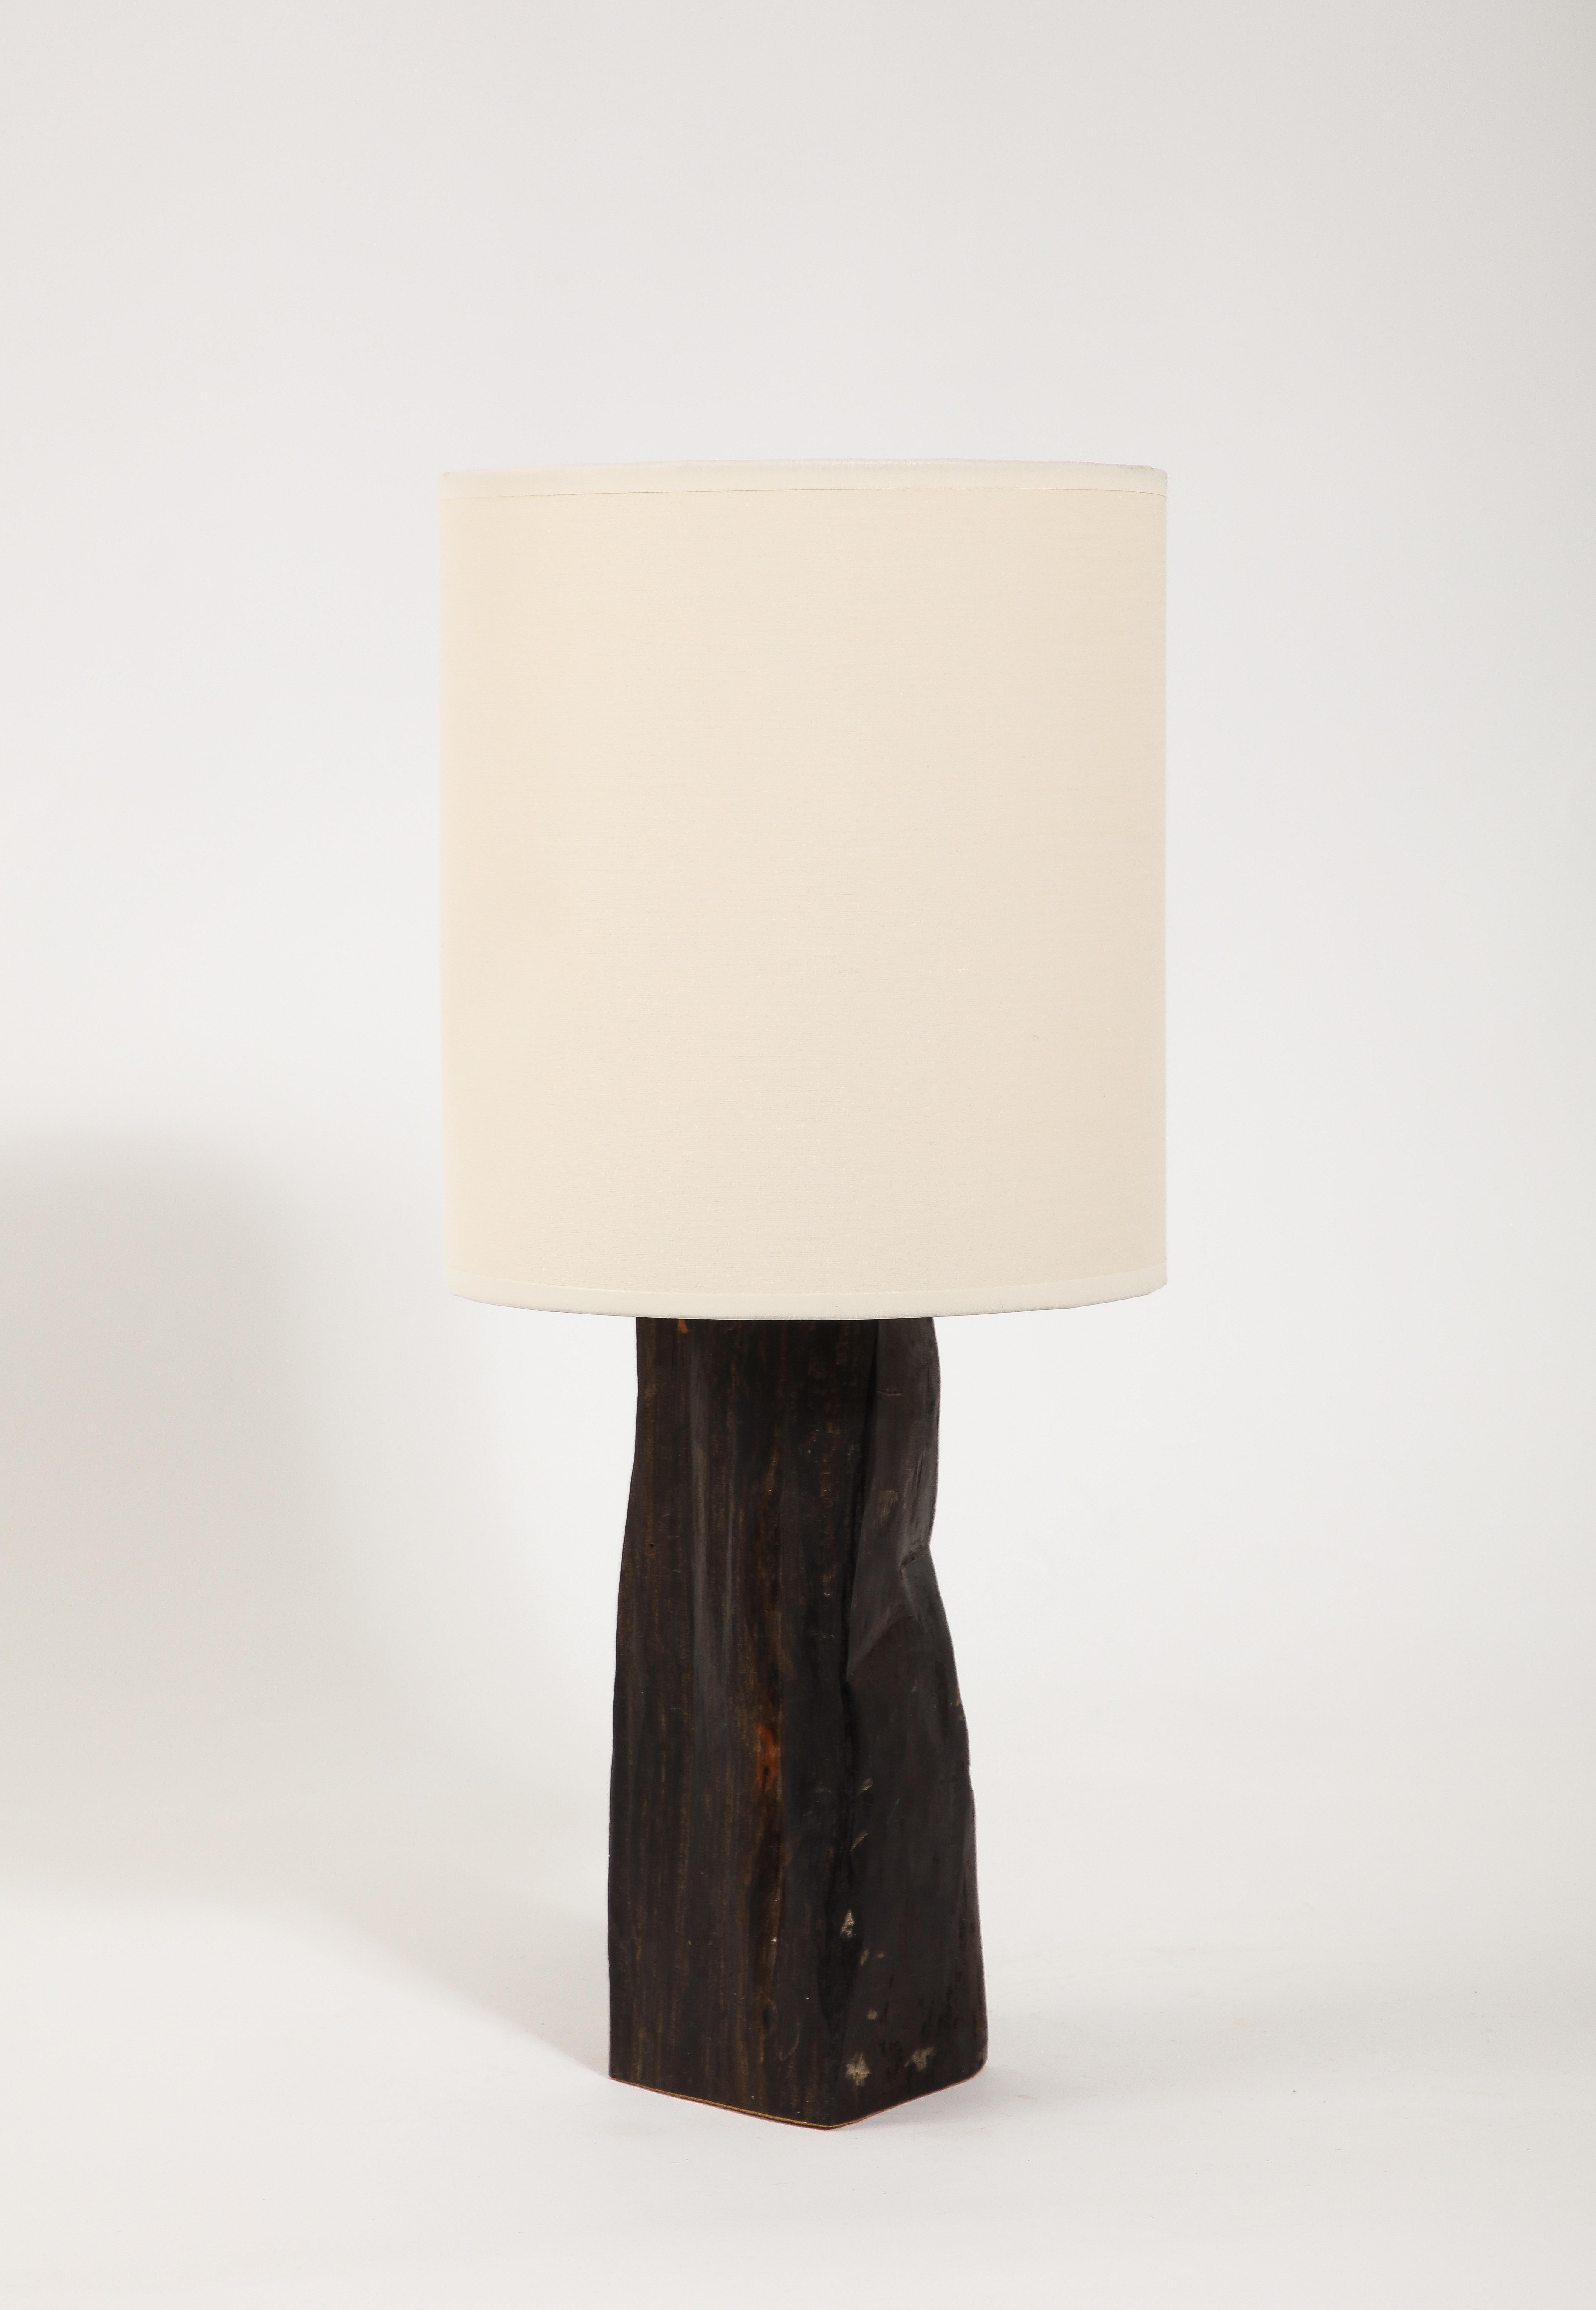 Carved Black Ebony Table Lamp, France 1960's For Sale 2